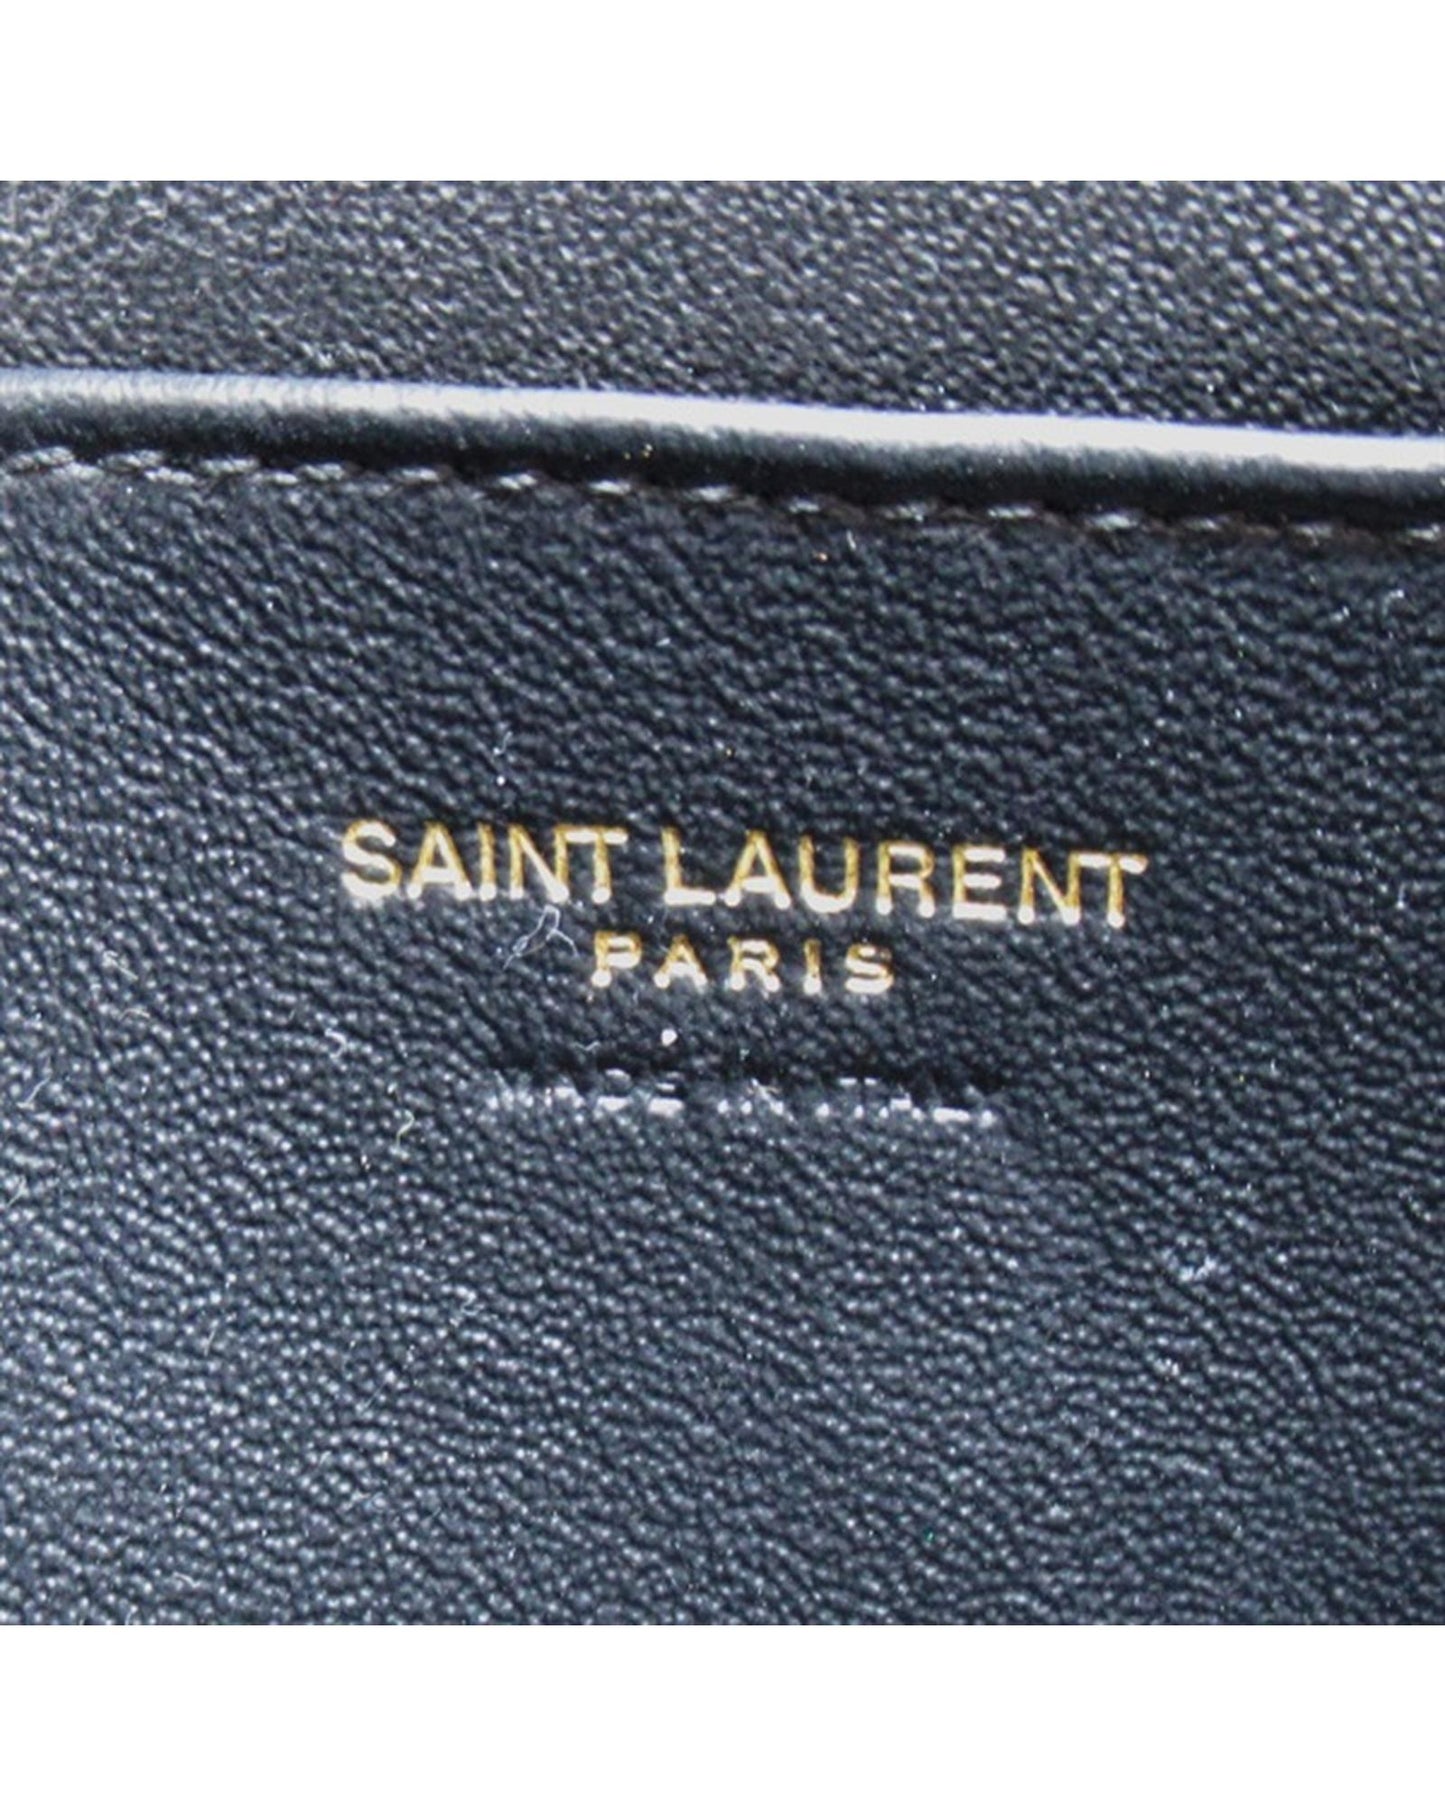 Yves Saint Laurent Women's Black Leather Monogram Baby Cabas Bag - Excellent Condition in Black